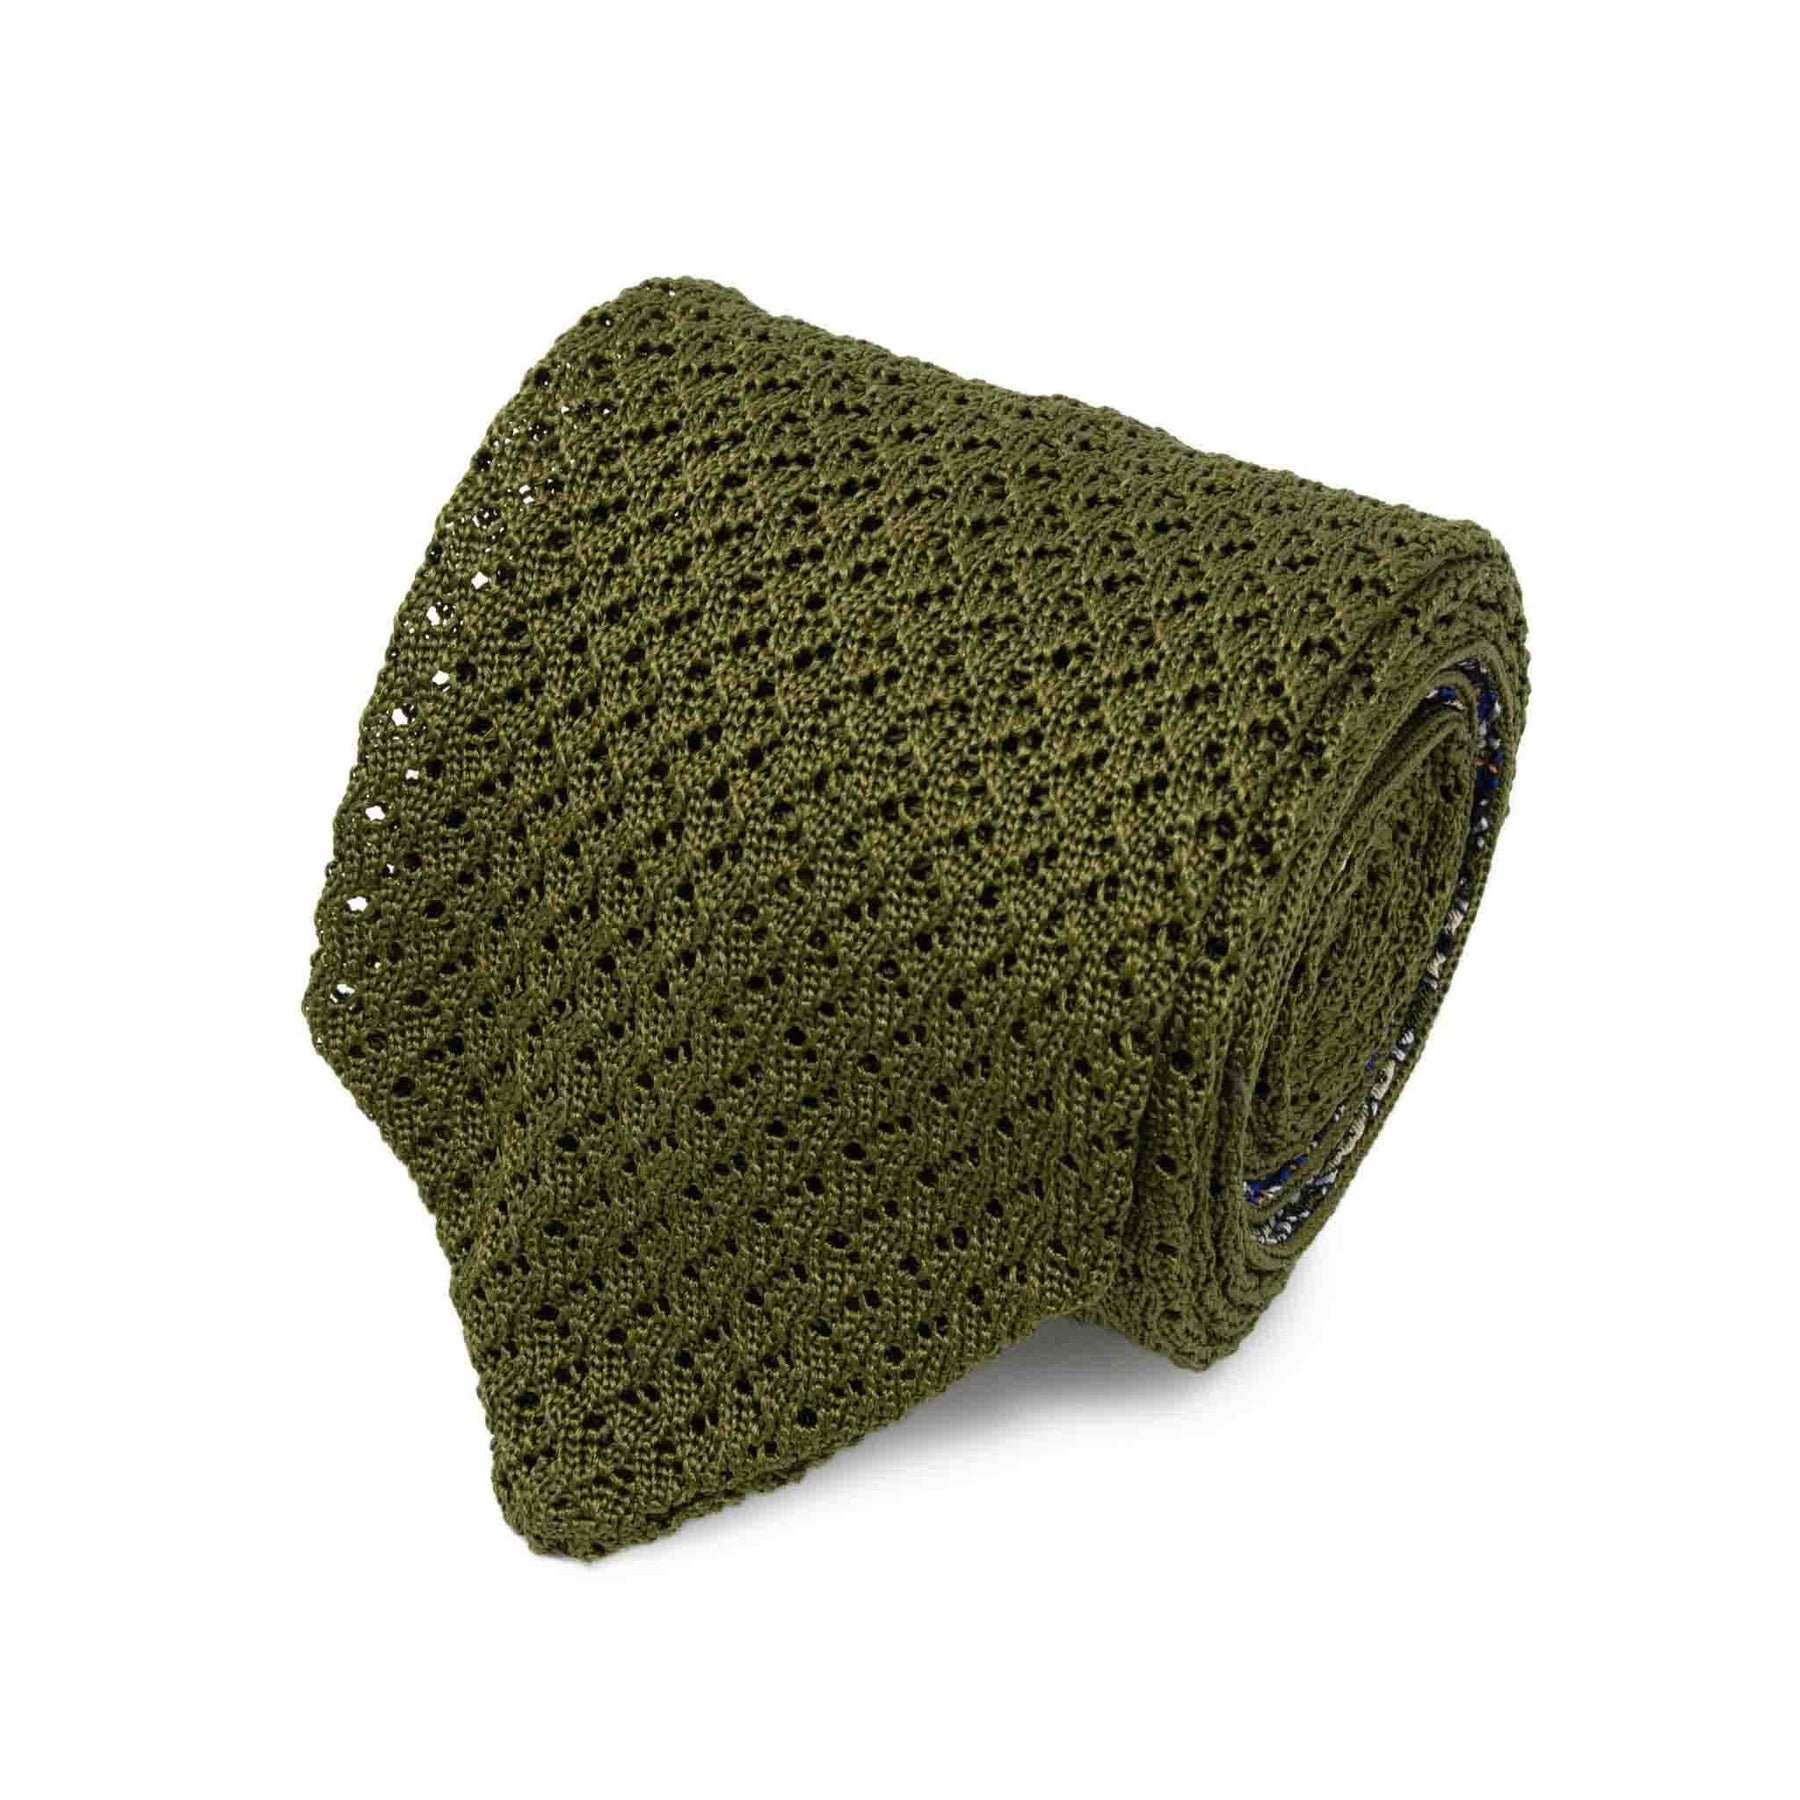 Moss Green Hazelnut V Point Knitted Tie Serà Fine Silk